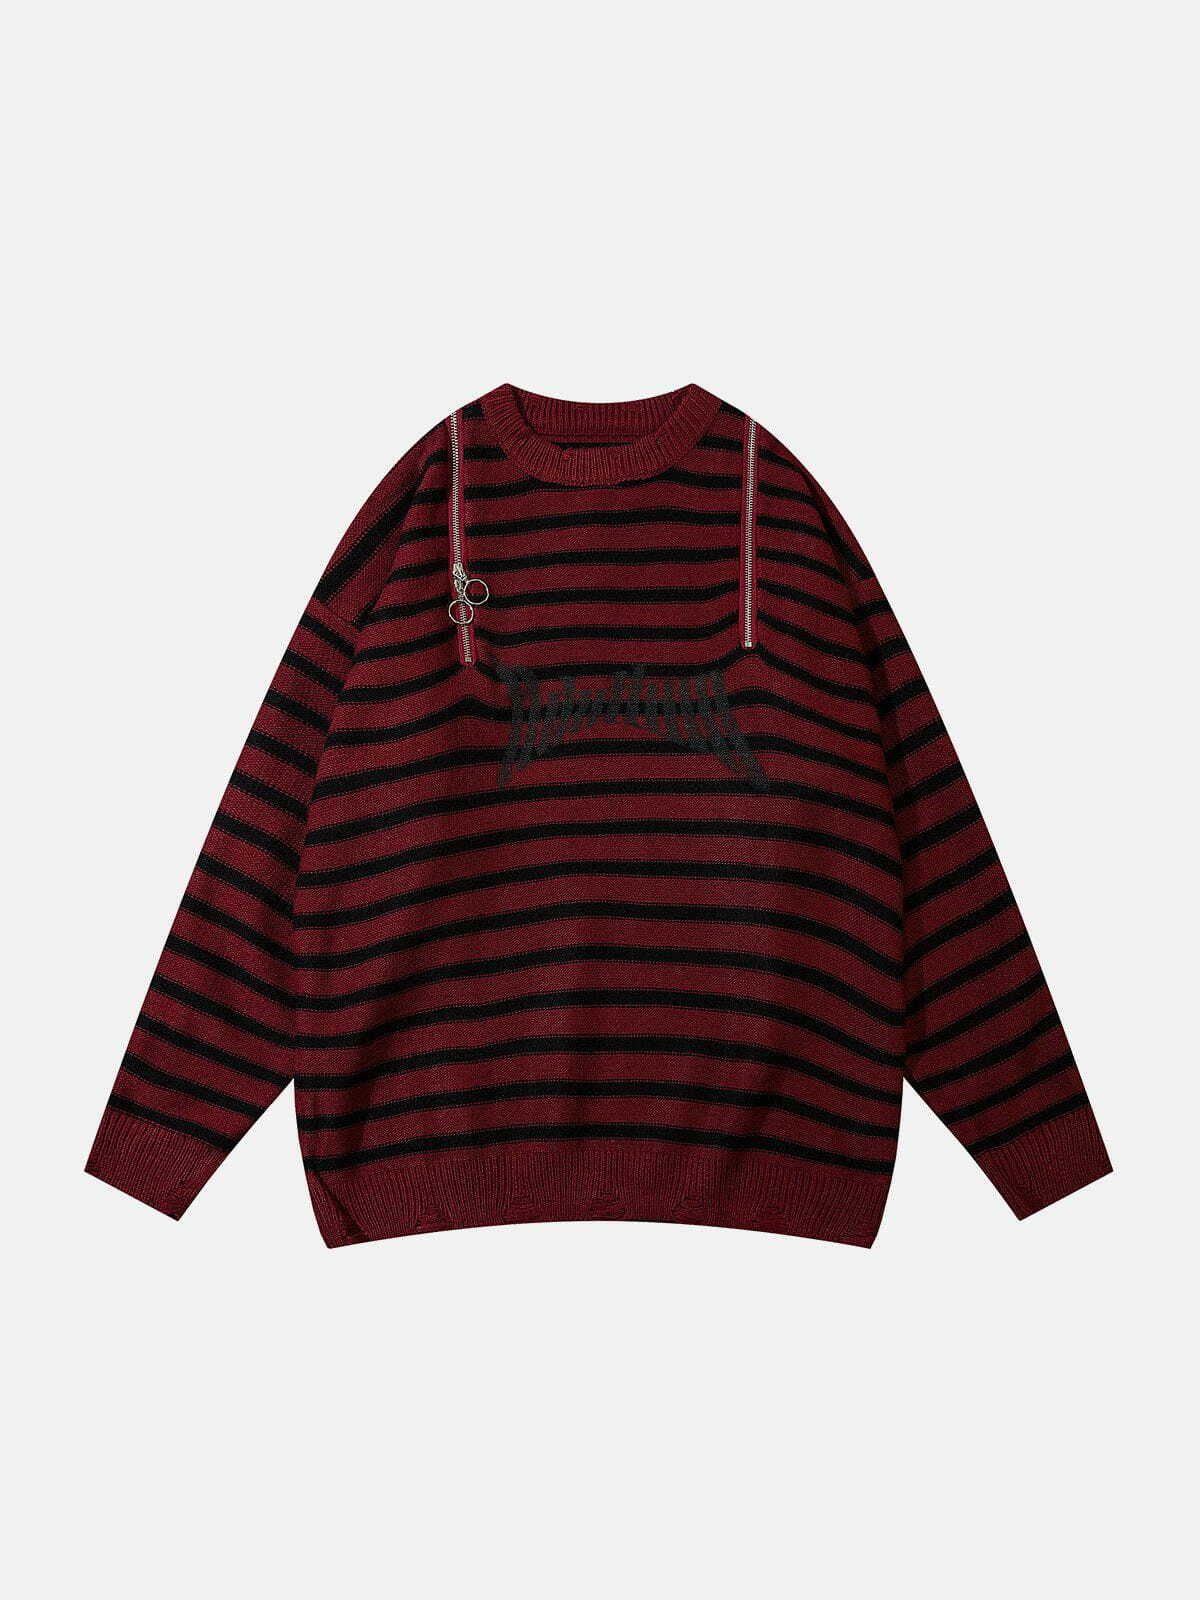 chic striped zipper sweater edgy y2k fashion 8296